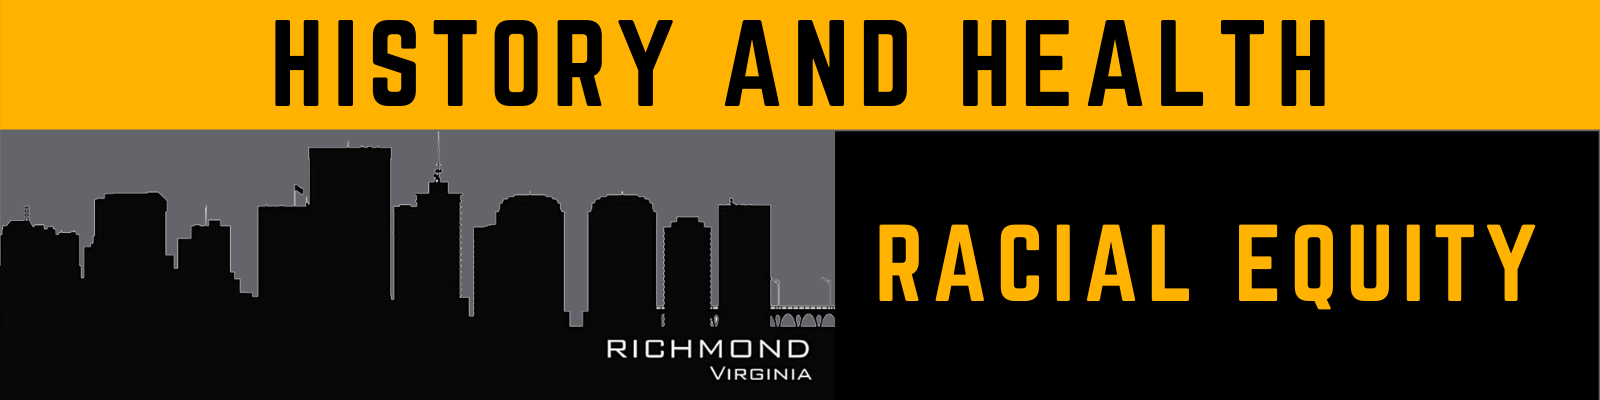 History and Health: Racial Equity. Richmond skyline and Richmond, VA written.